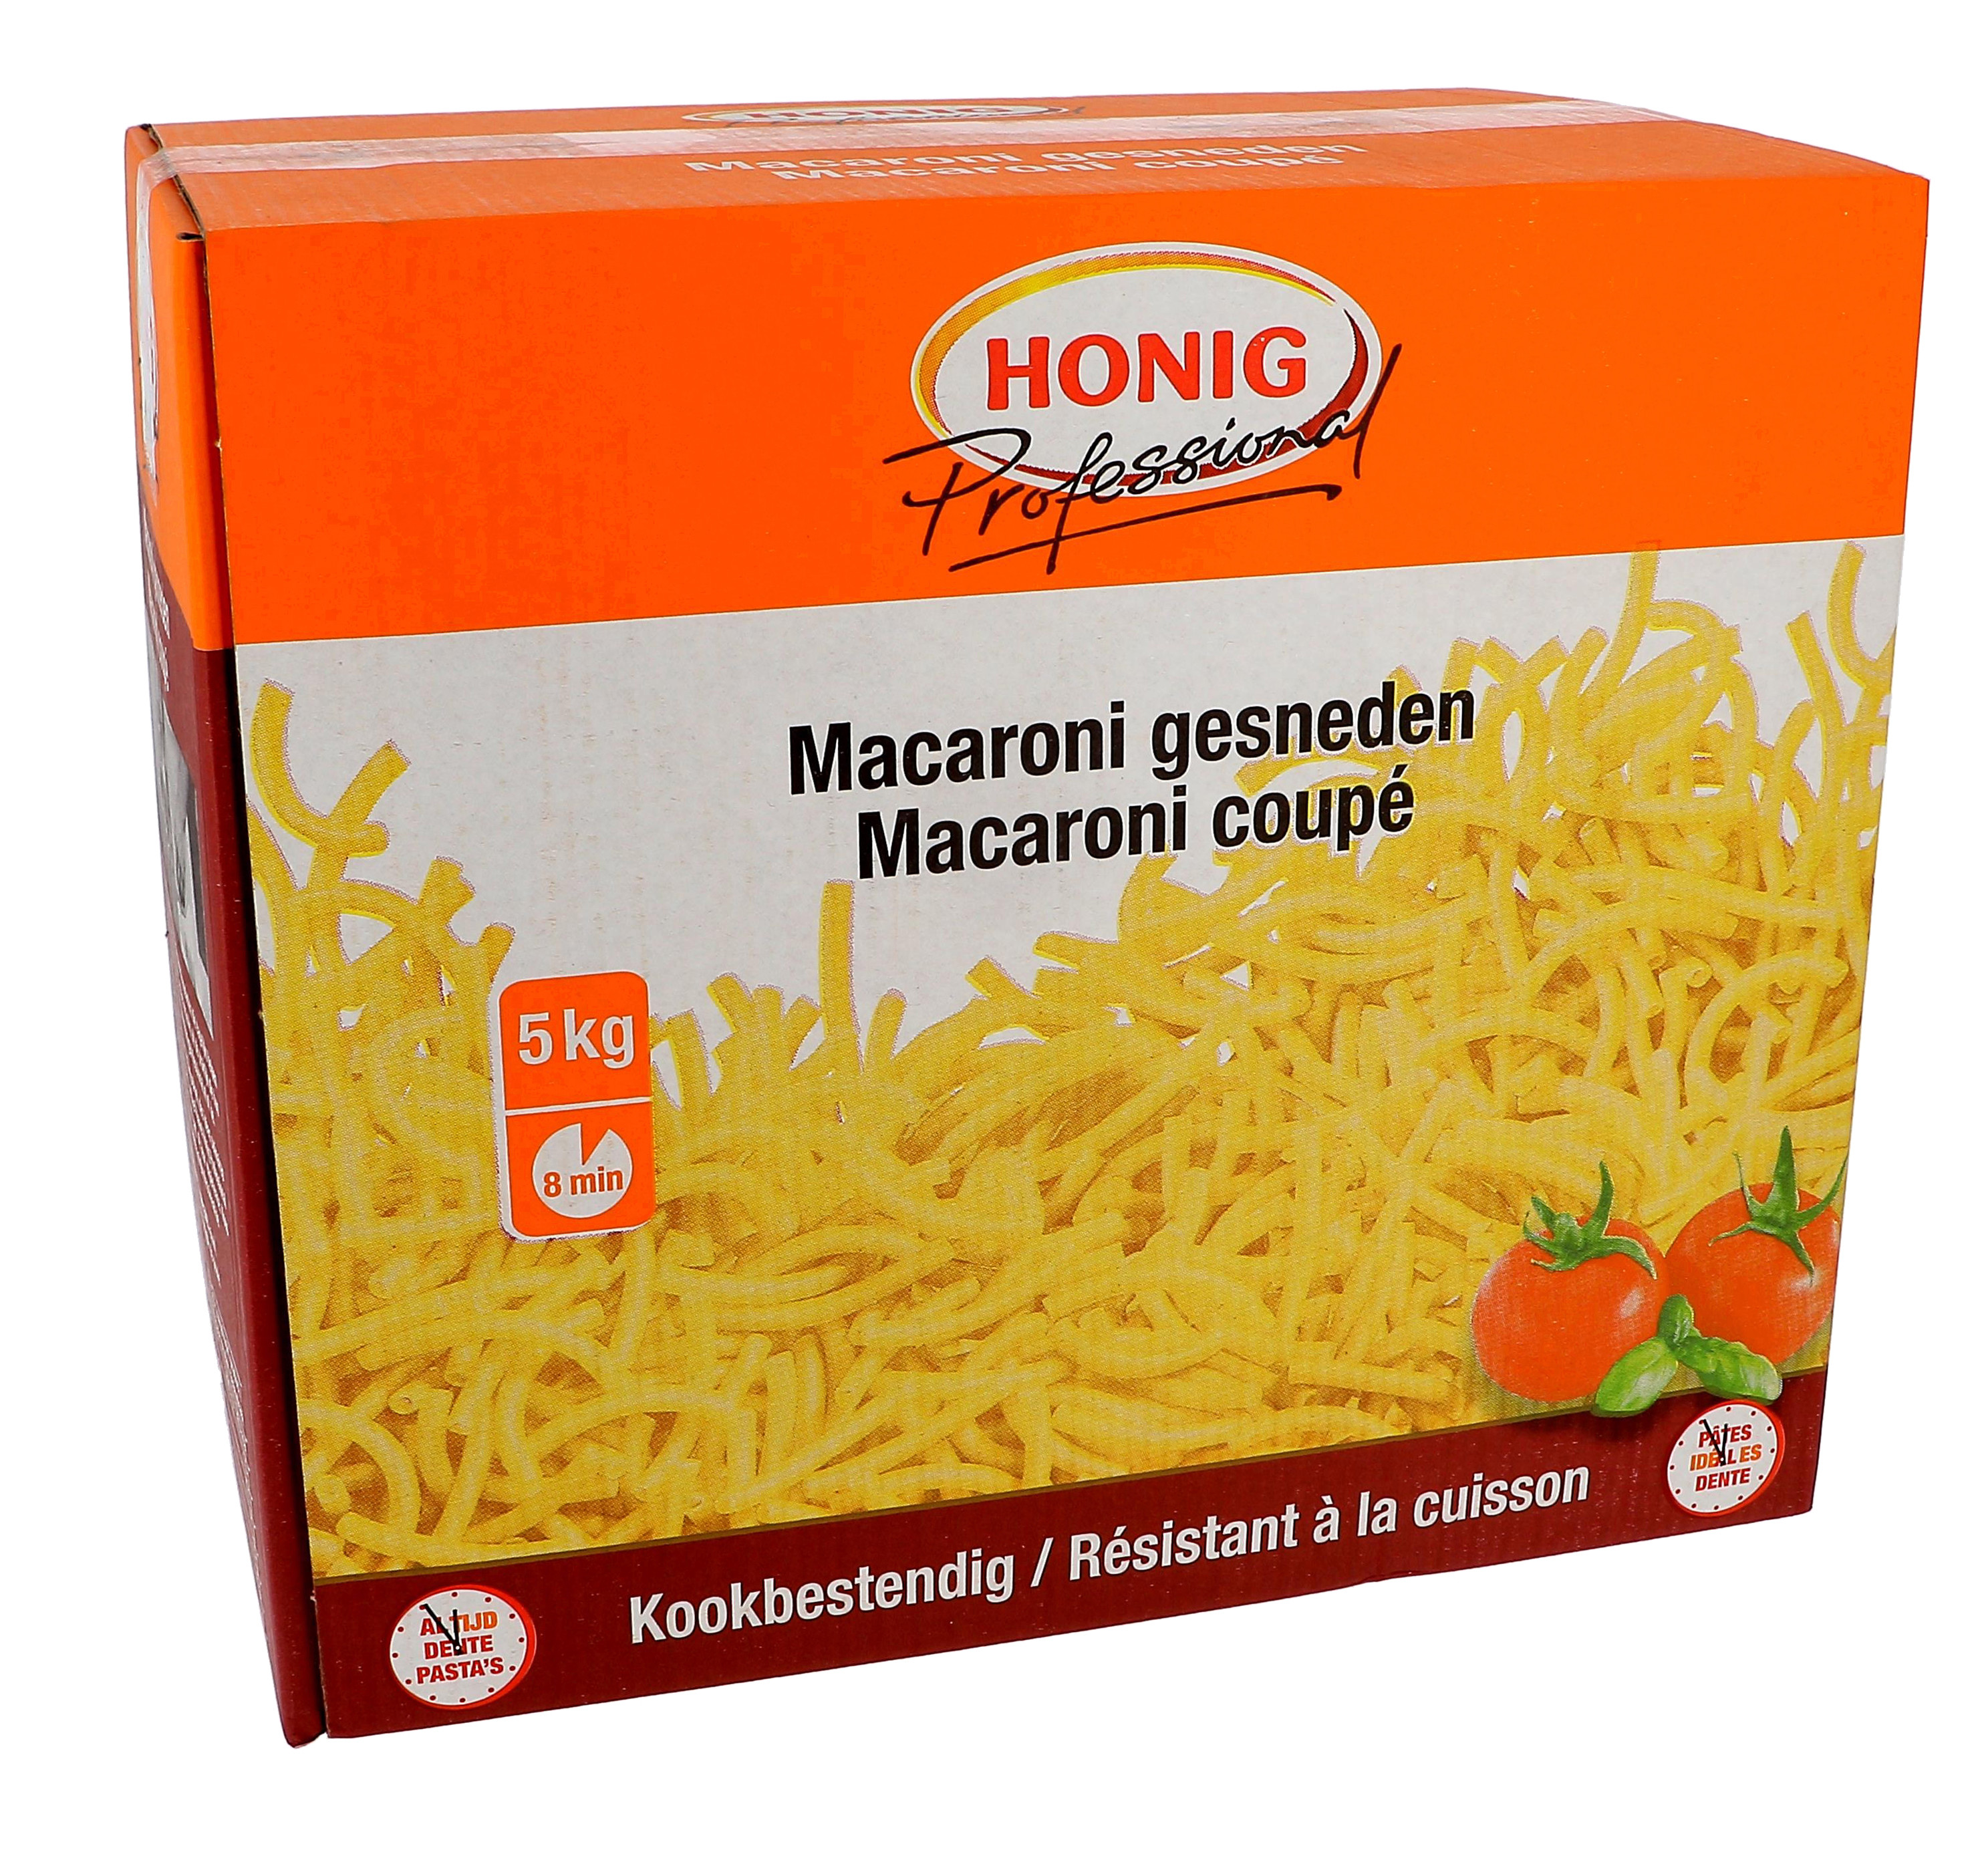 Honig macaroni gesneden 5kg Professional kookbestendig